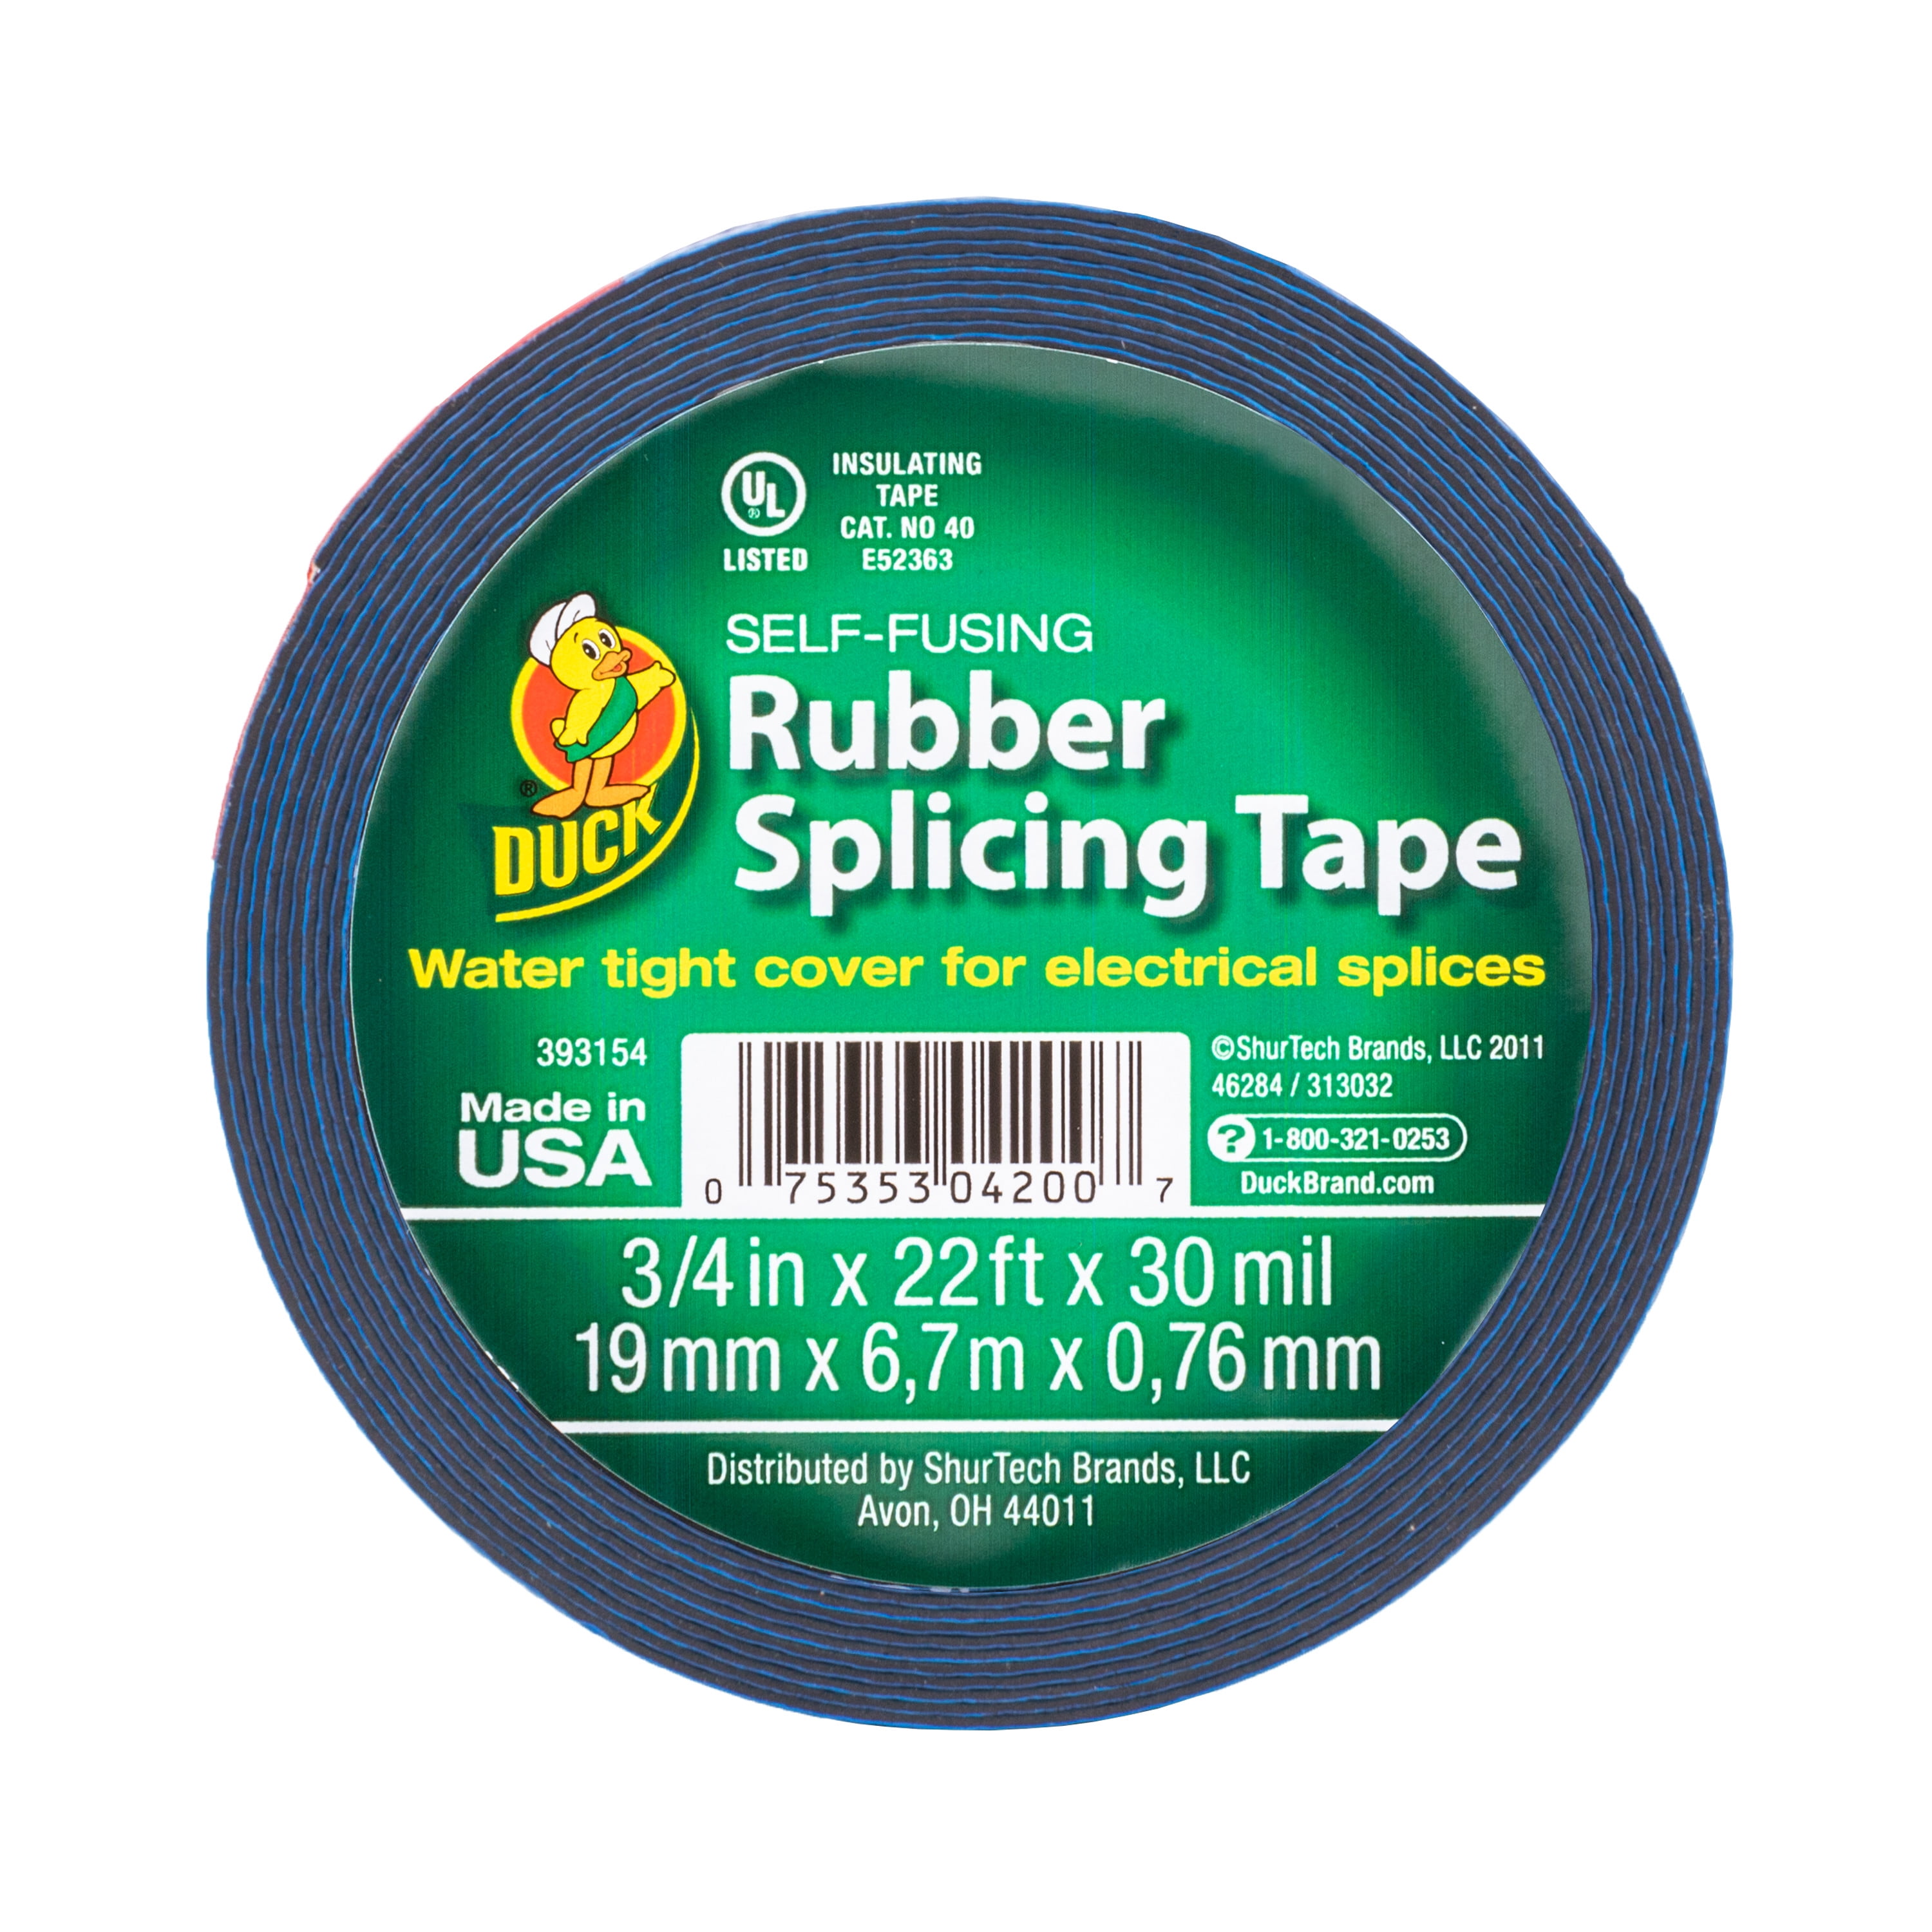 Duck Brand Self-Fusing Rubber Splicing Tape Blue 3/4" x 22 FT 